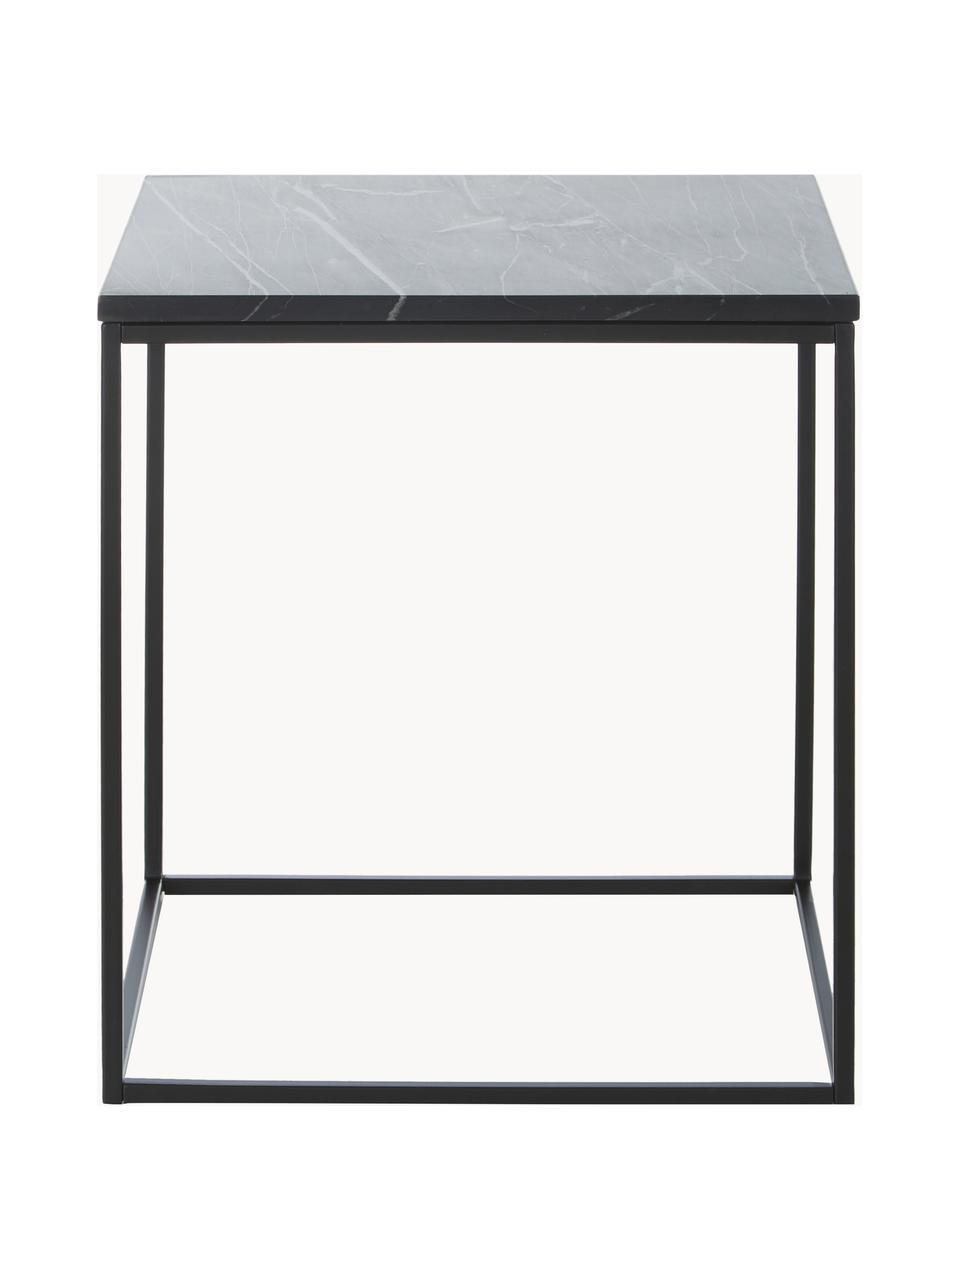 Mramorový odkládací stolek Alys, Černá mramorovaná, černá, Š 45 cm, V 50 cm